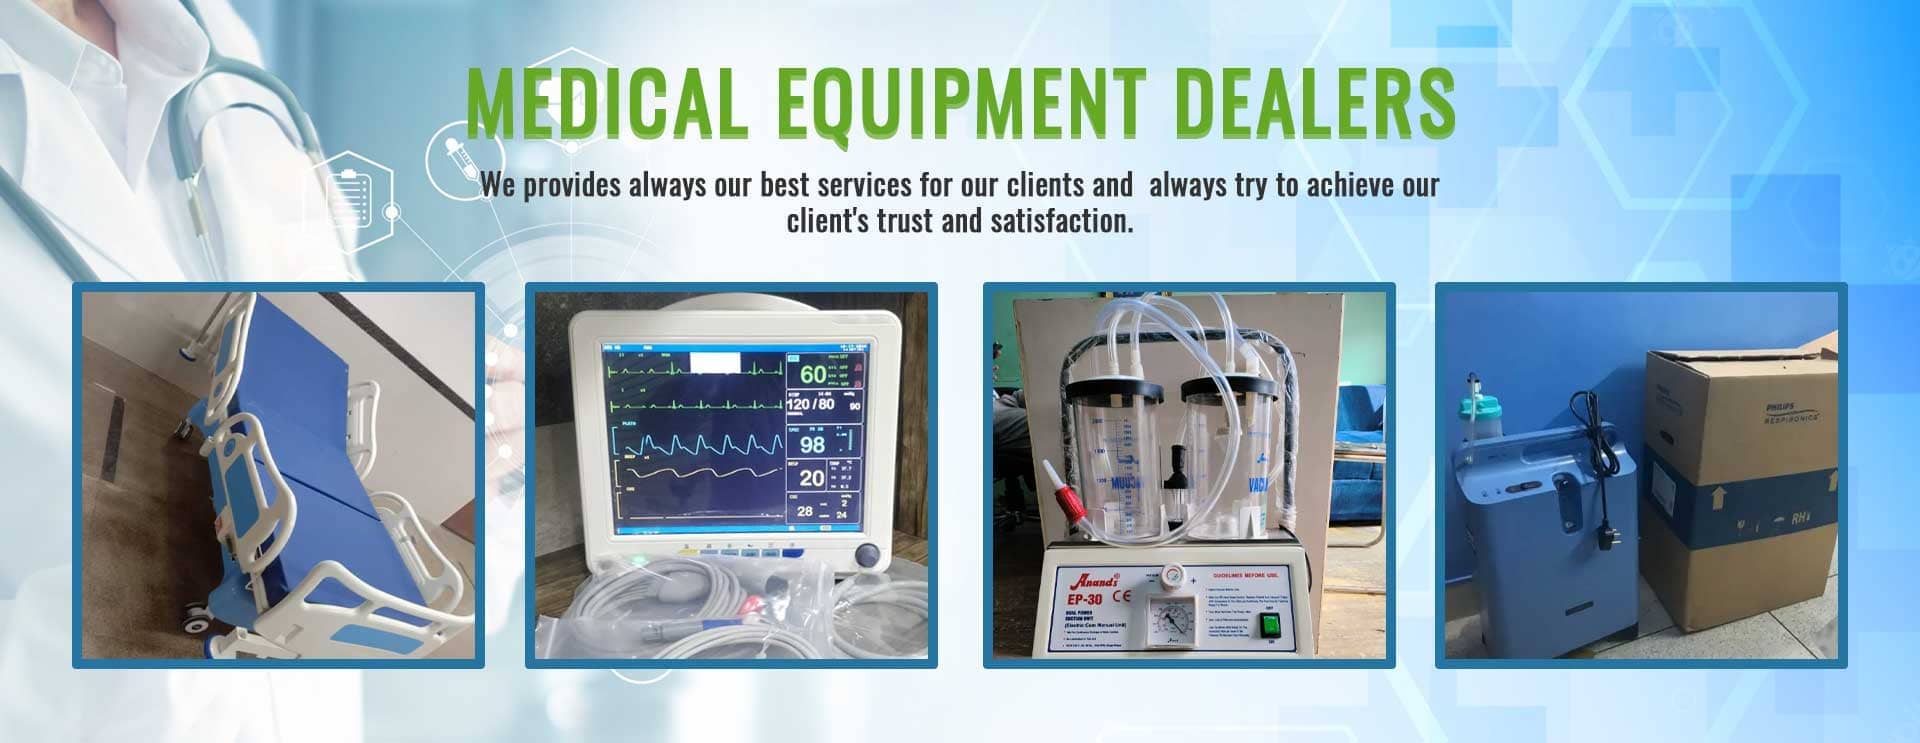 Medical Equipment Dealers in Noida